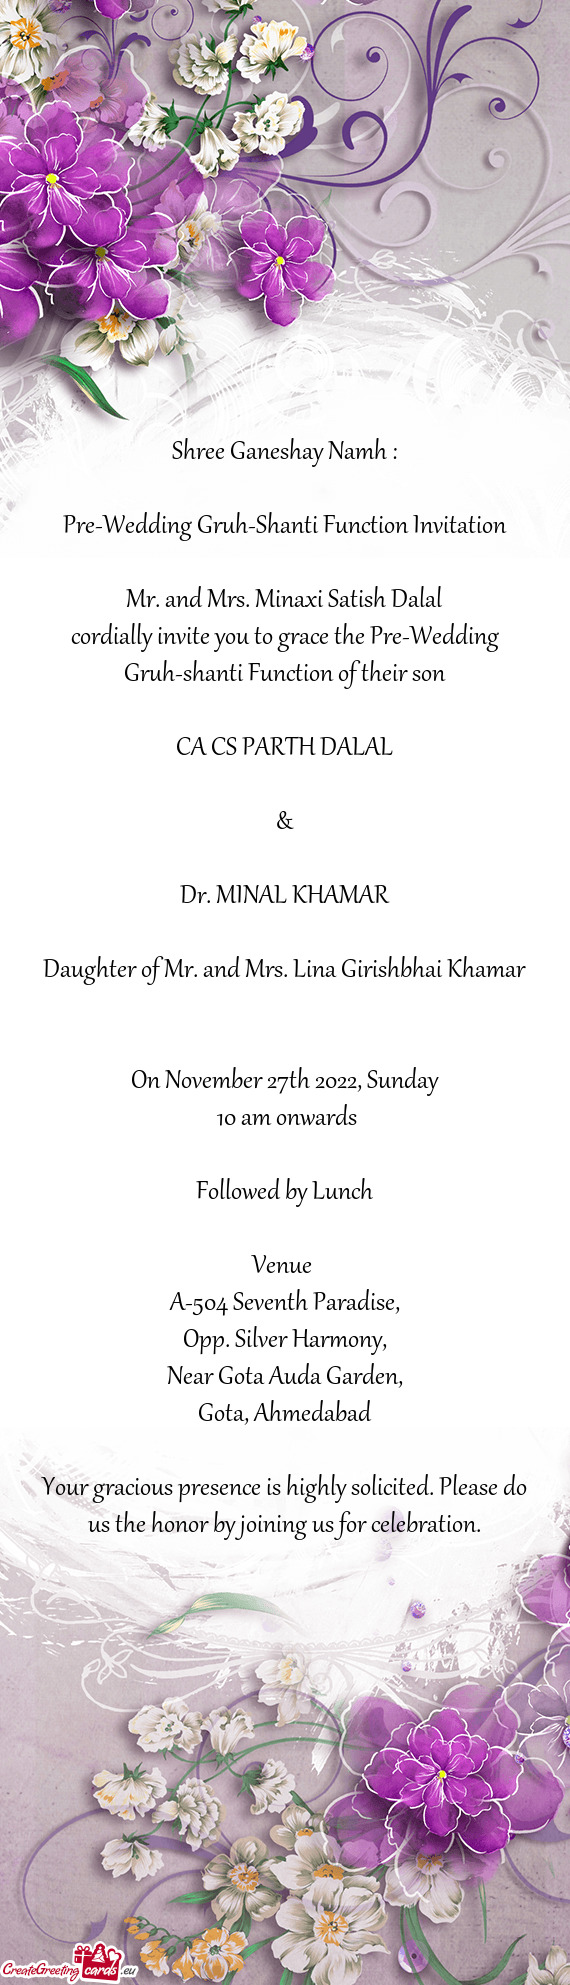 Pre-Wedding Gruh-Shanti Function Invitation